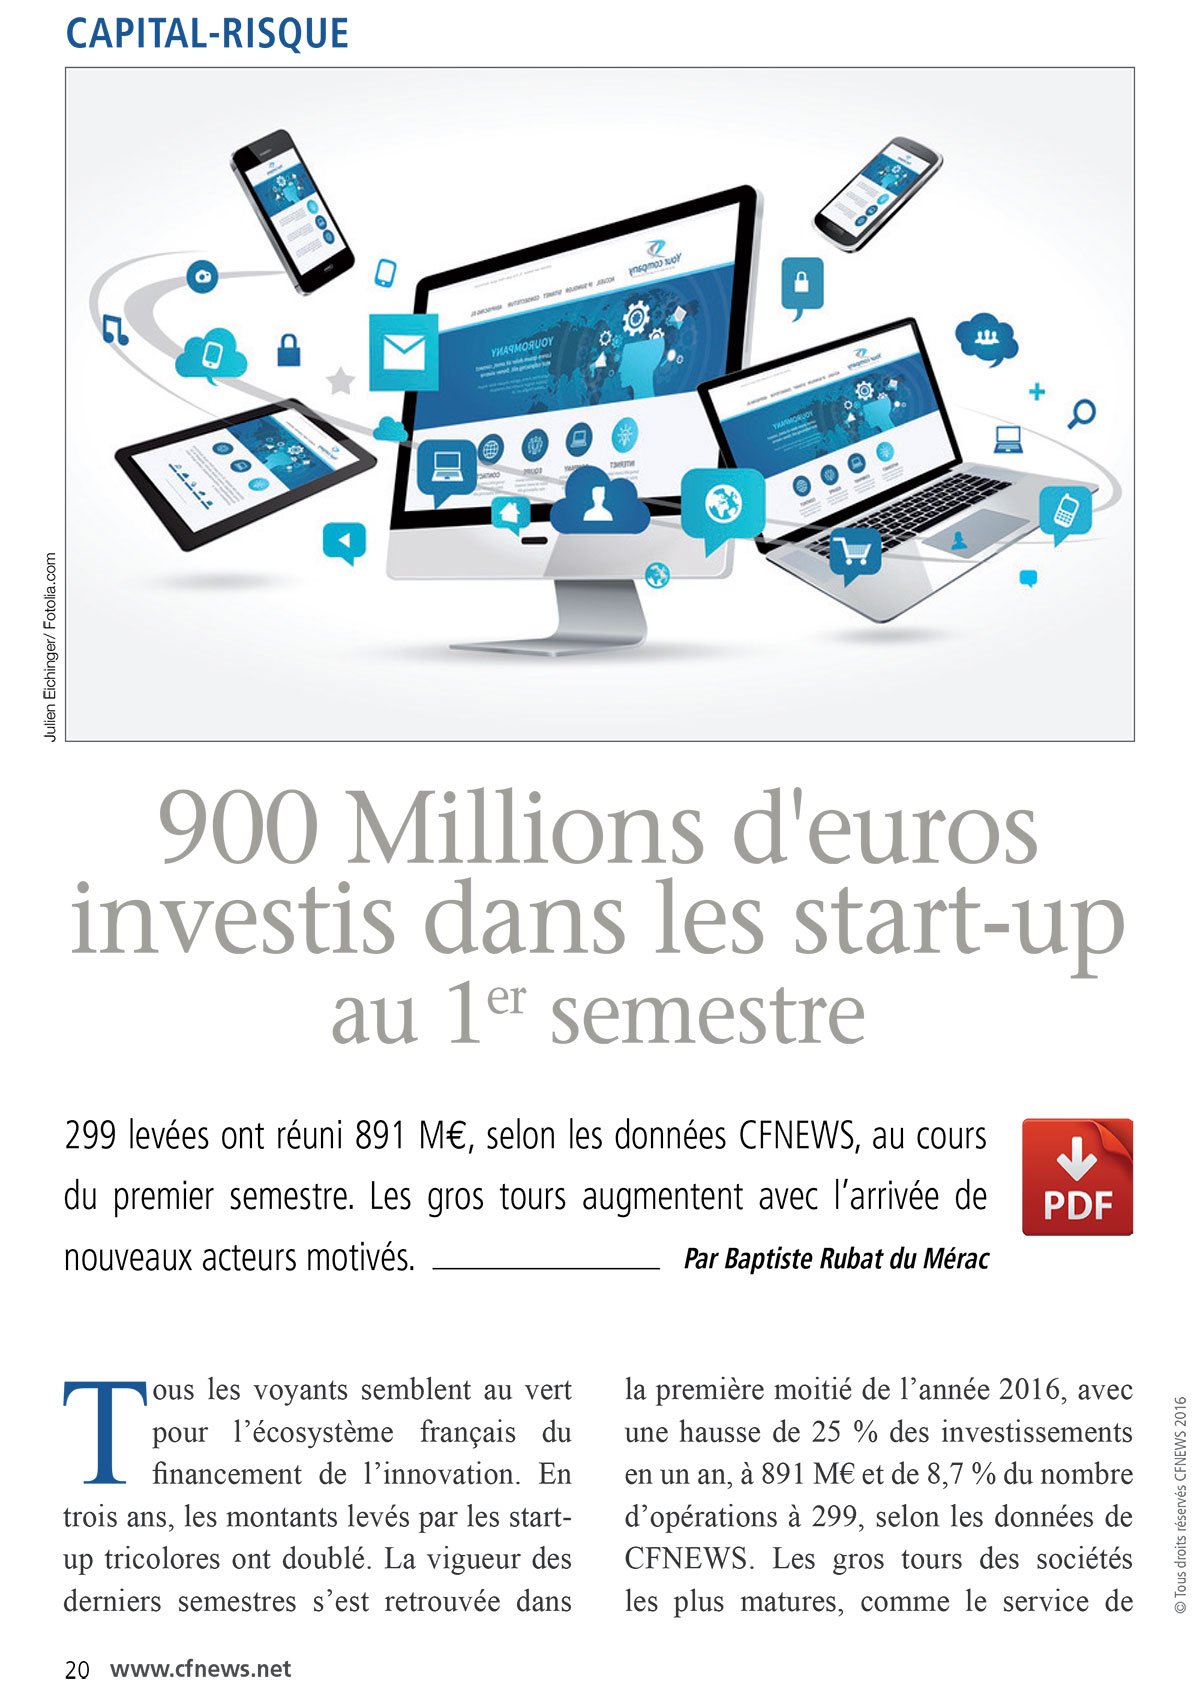 sept2016-900_millions_d_euros_investis_dans_les_startup_au_1er_semestre